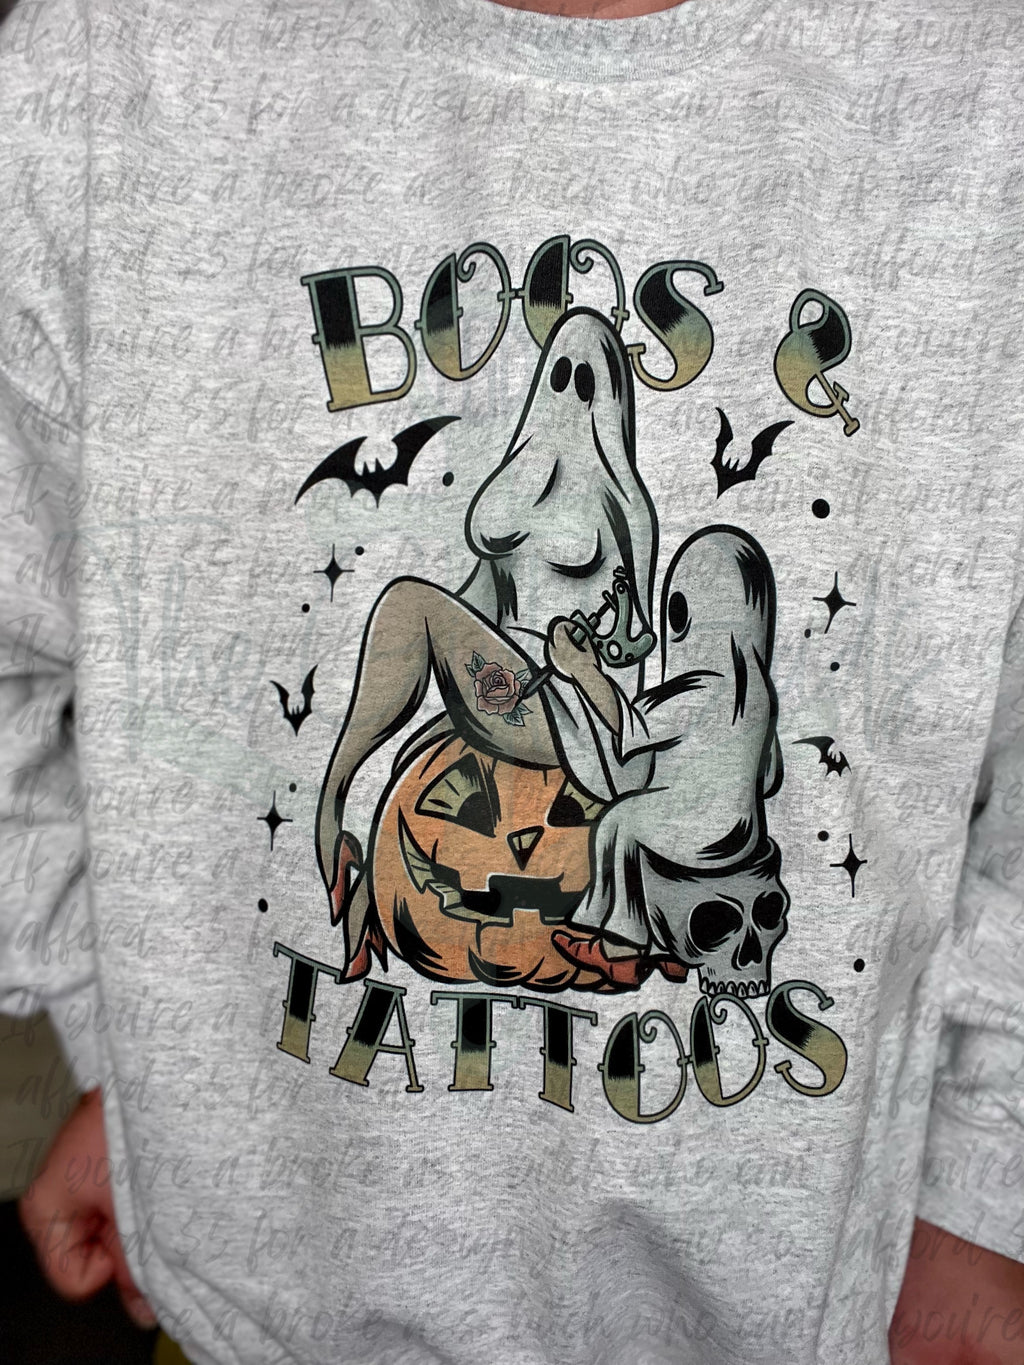 Boos & Tattoos Top Design